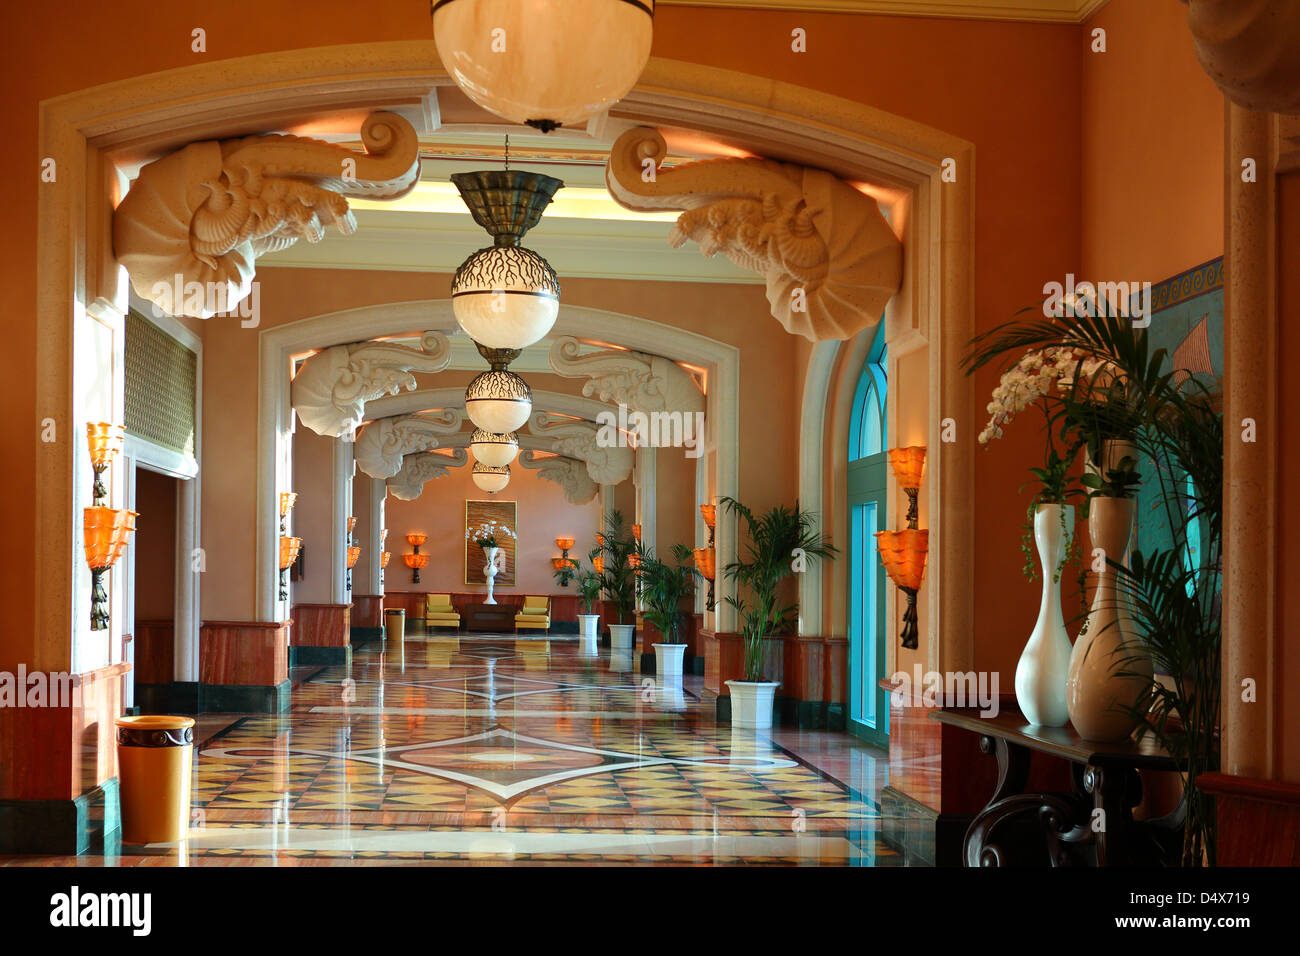 Atlantis Hotel Interior Dubai United Arab Emirates Stock Photo Alamy